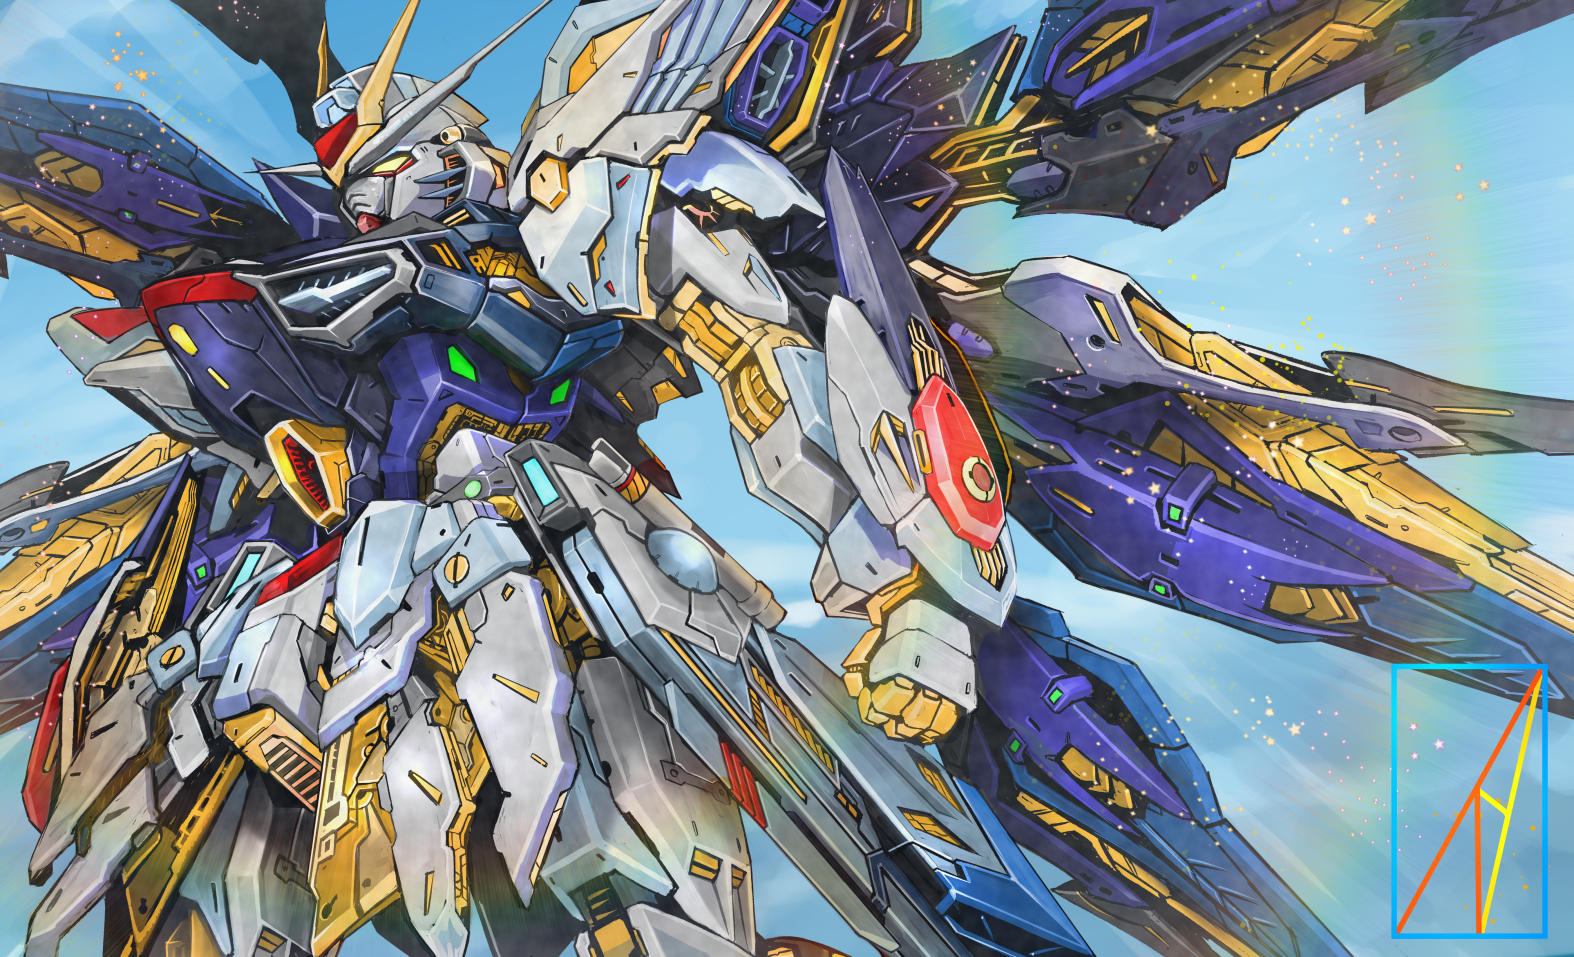 Anime 1574x957 anime mechs Super Robot Taisen Gundam artwork digital art fan art Strike Freedom Gundam Mobile Suit Gundam SEED Destiny